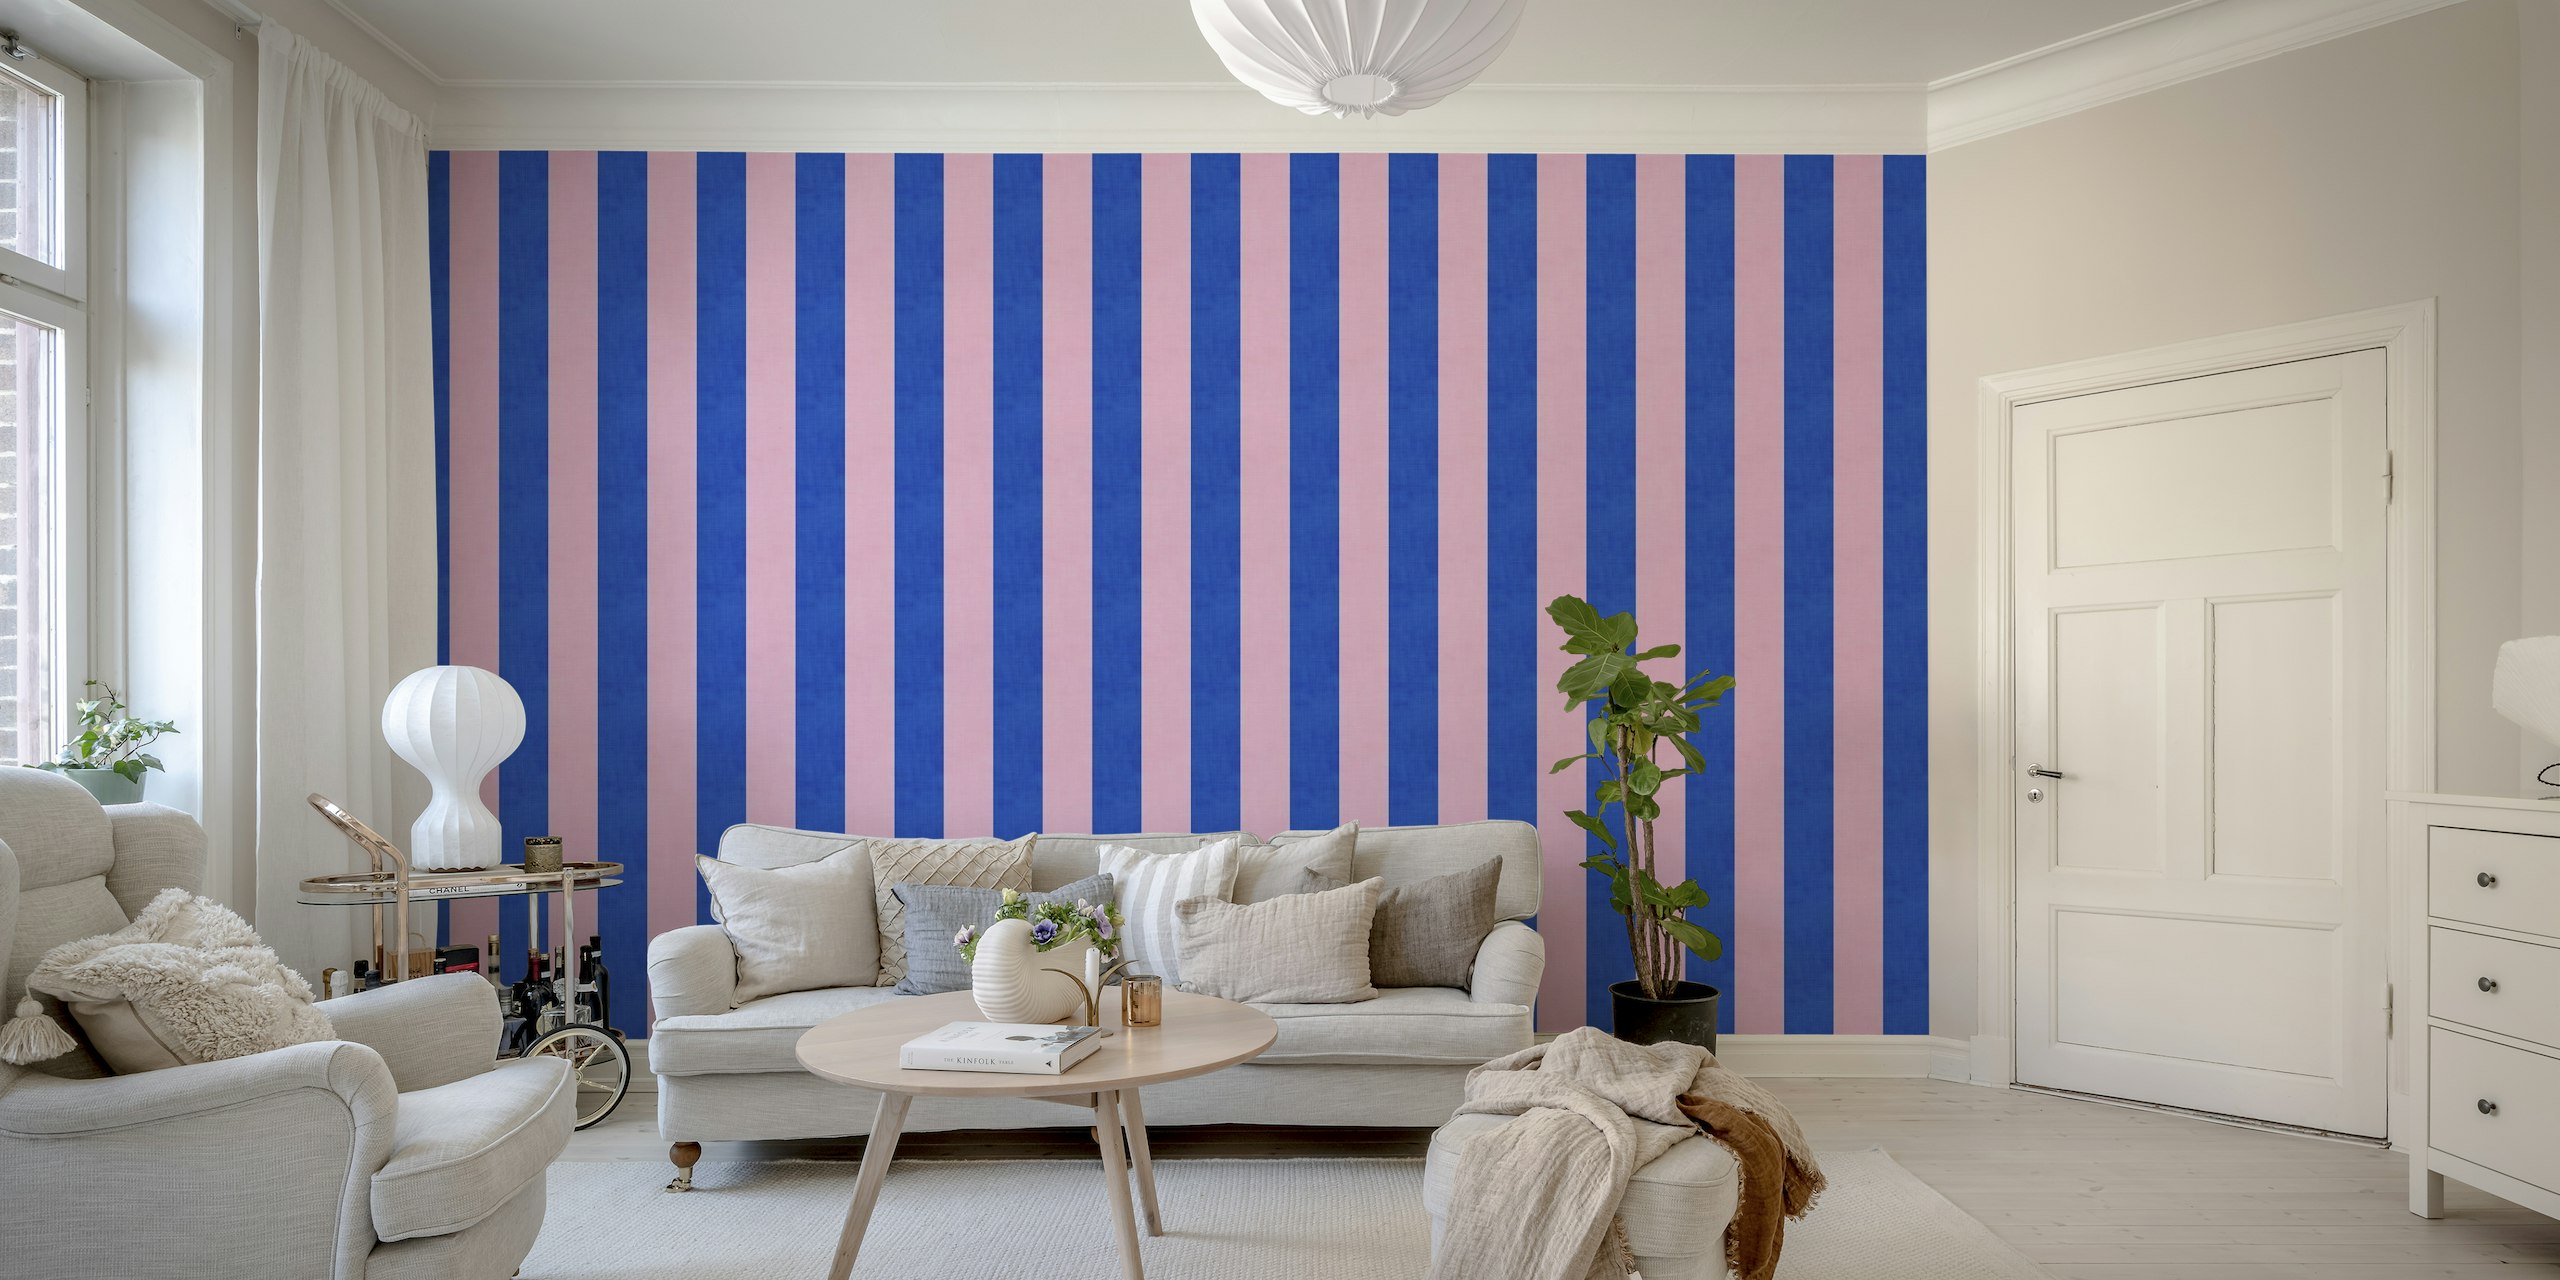 Cobalt Blue and Blush Pink Stripes wallpaper